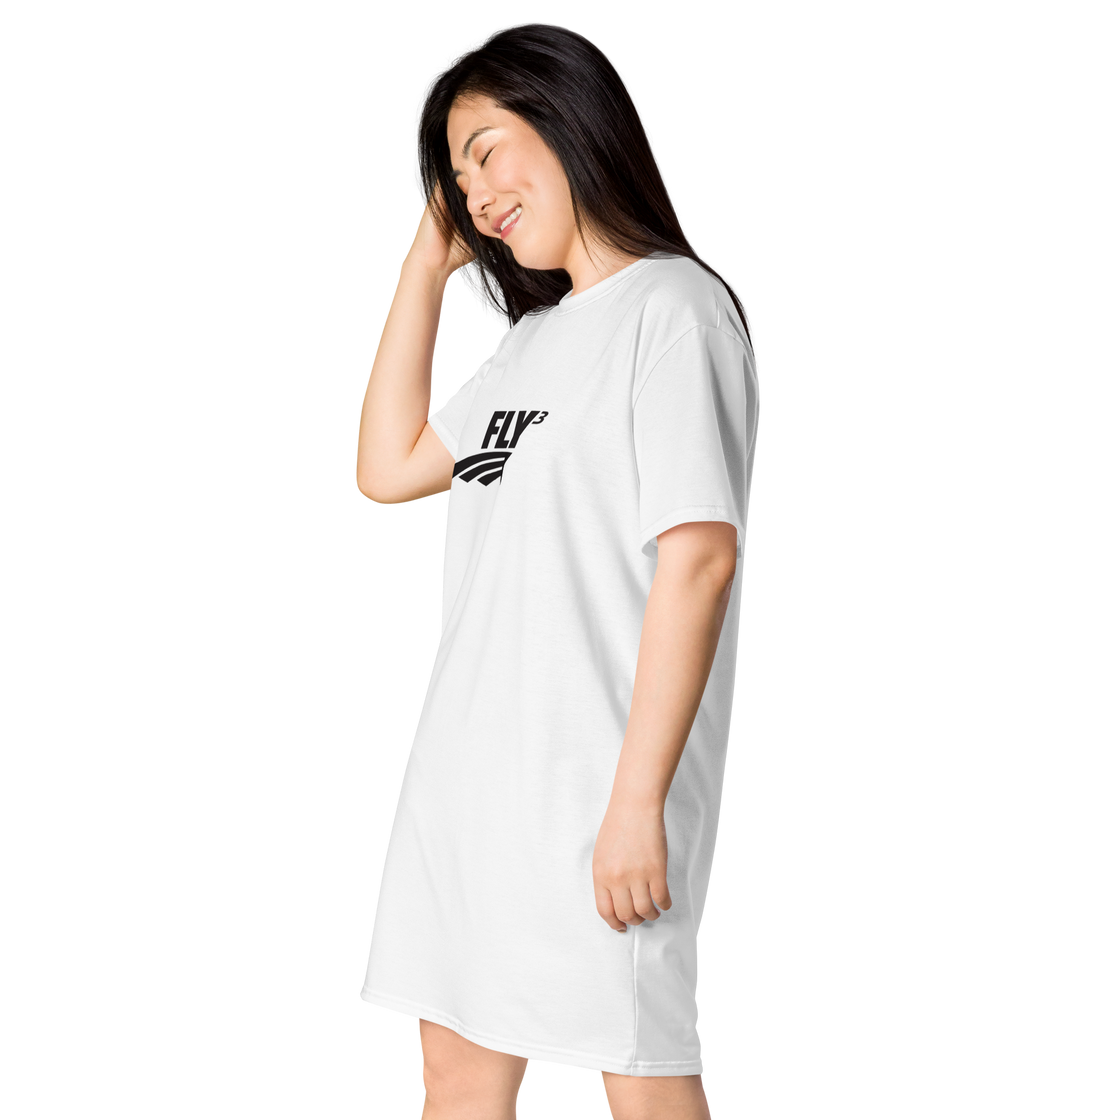 FLY³ T-shirt dress | Flycube